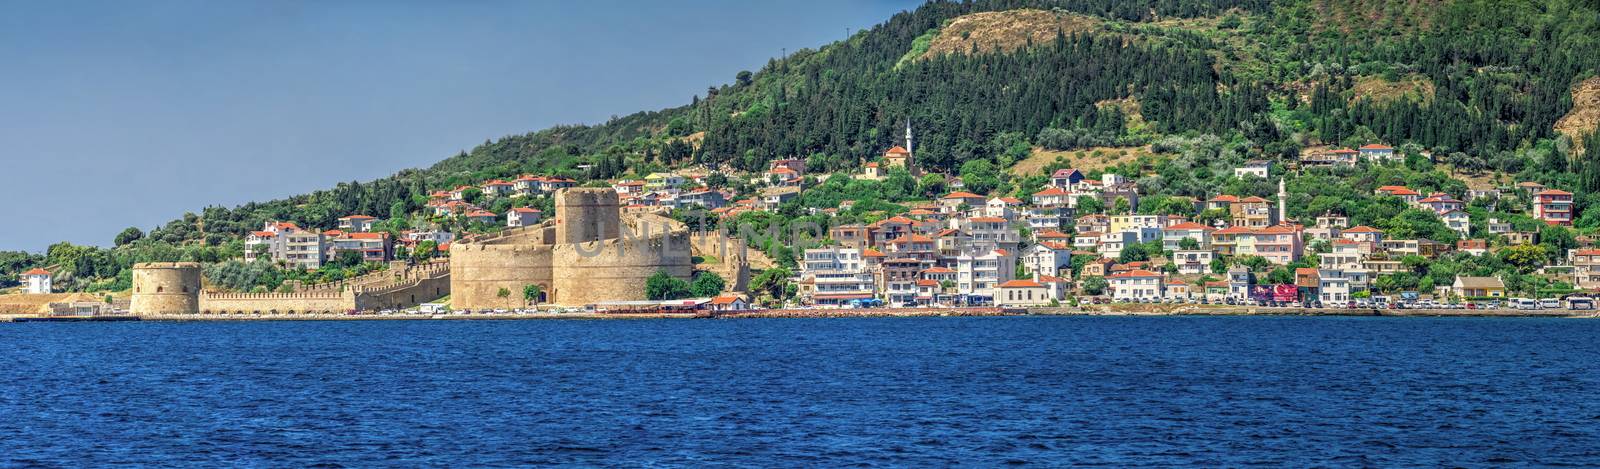 Kilitbahir castle in Turkey by Multipedia